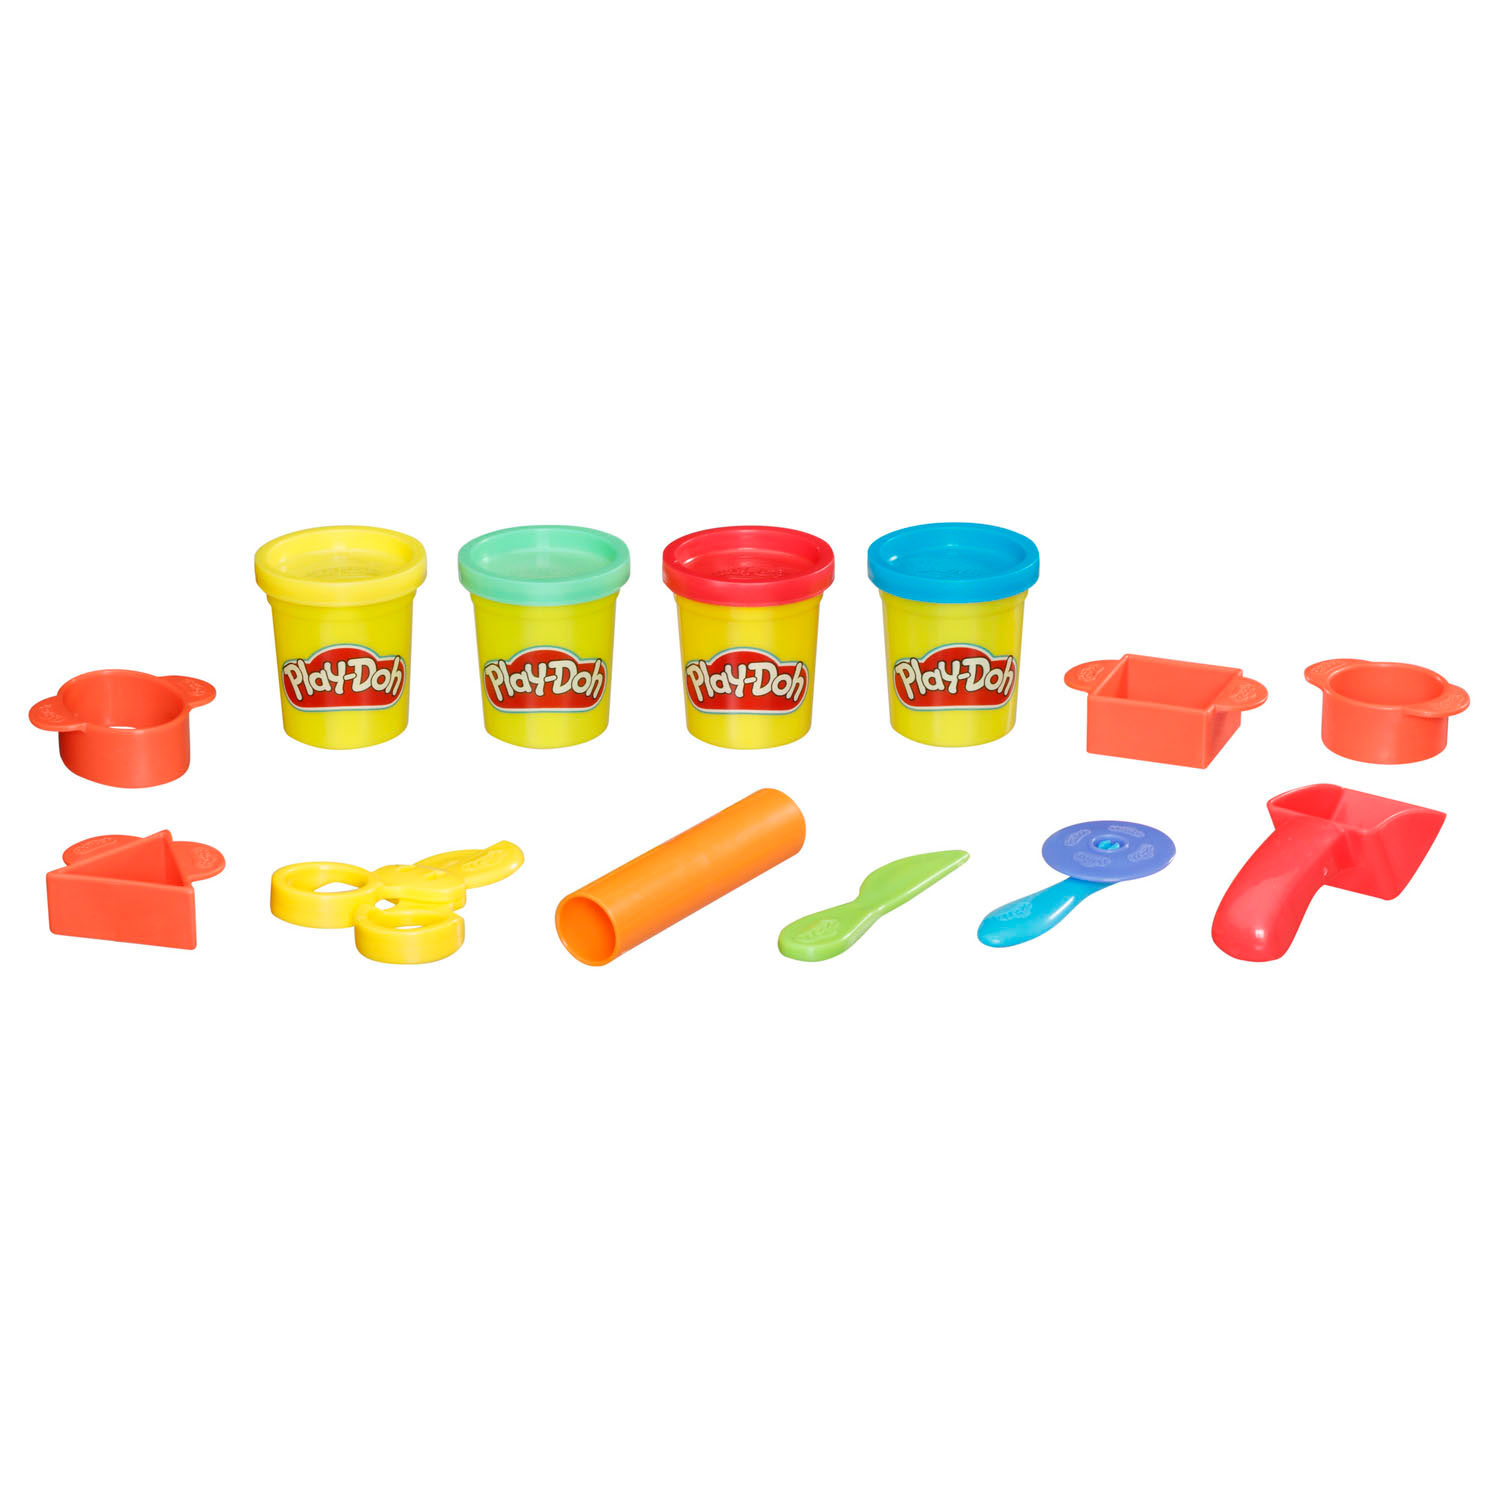 Play-Doh -Starterset